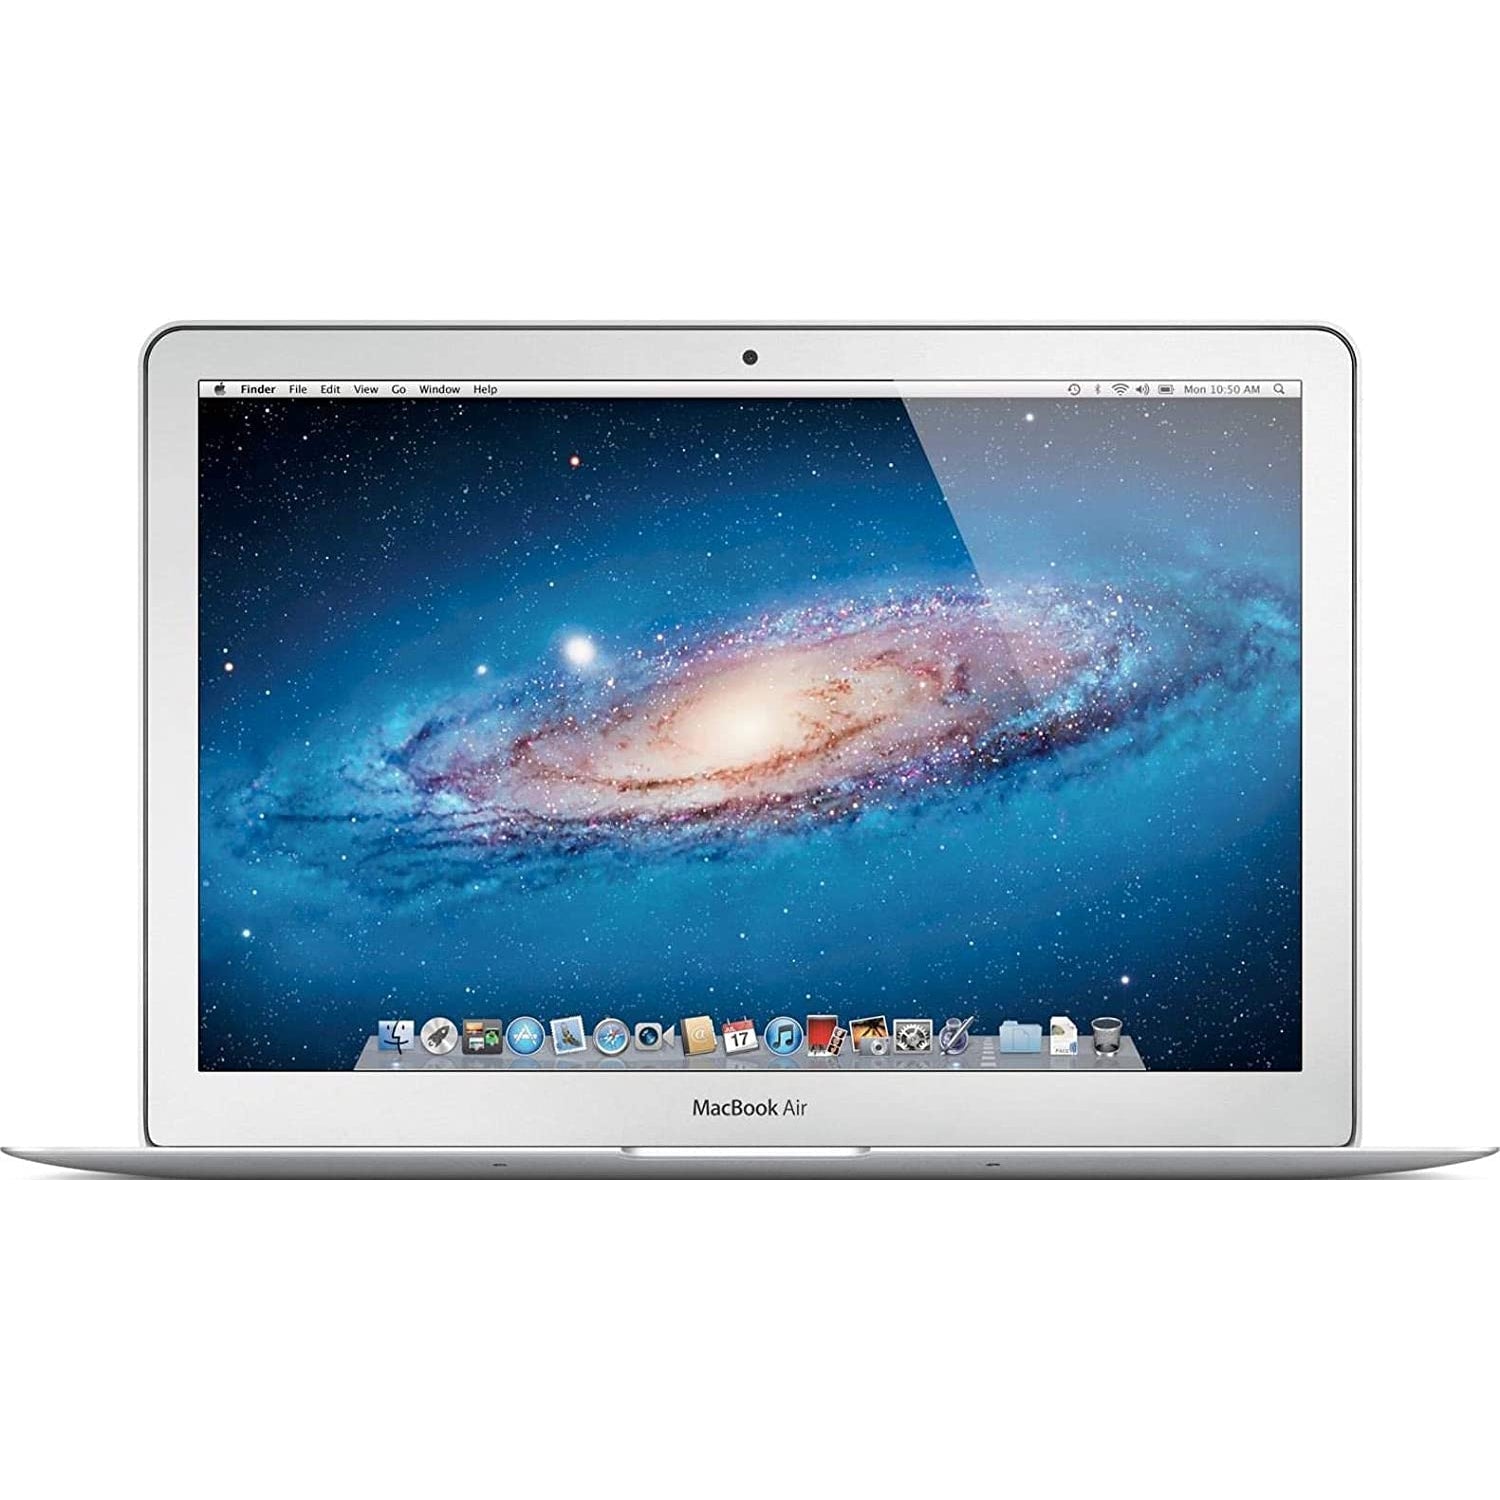 Apple MacBook Air MD760LL/A Laptop Intel i5 4GB 128GB